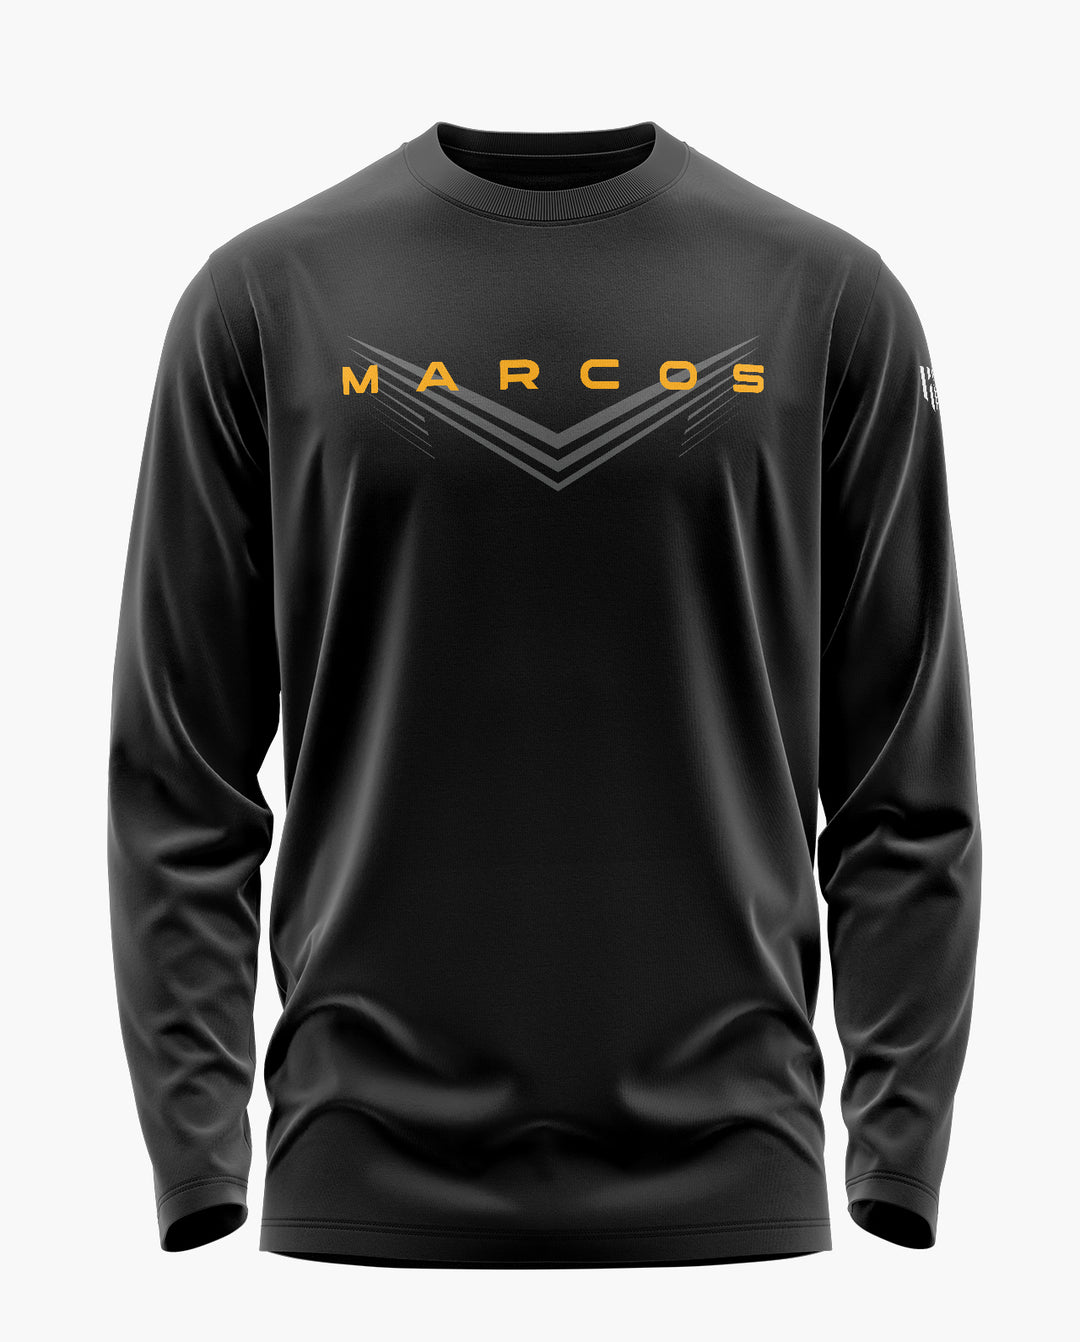 MARCOS Elite Full Sleeve T-Shirt - Aero Armour